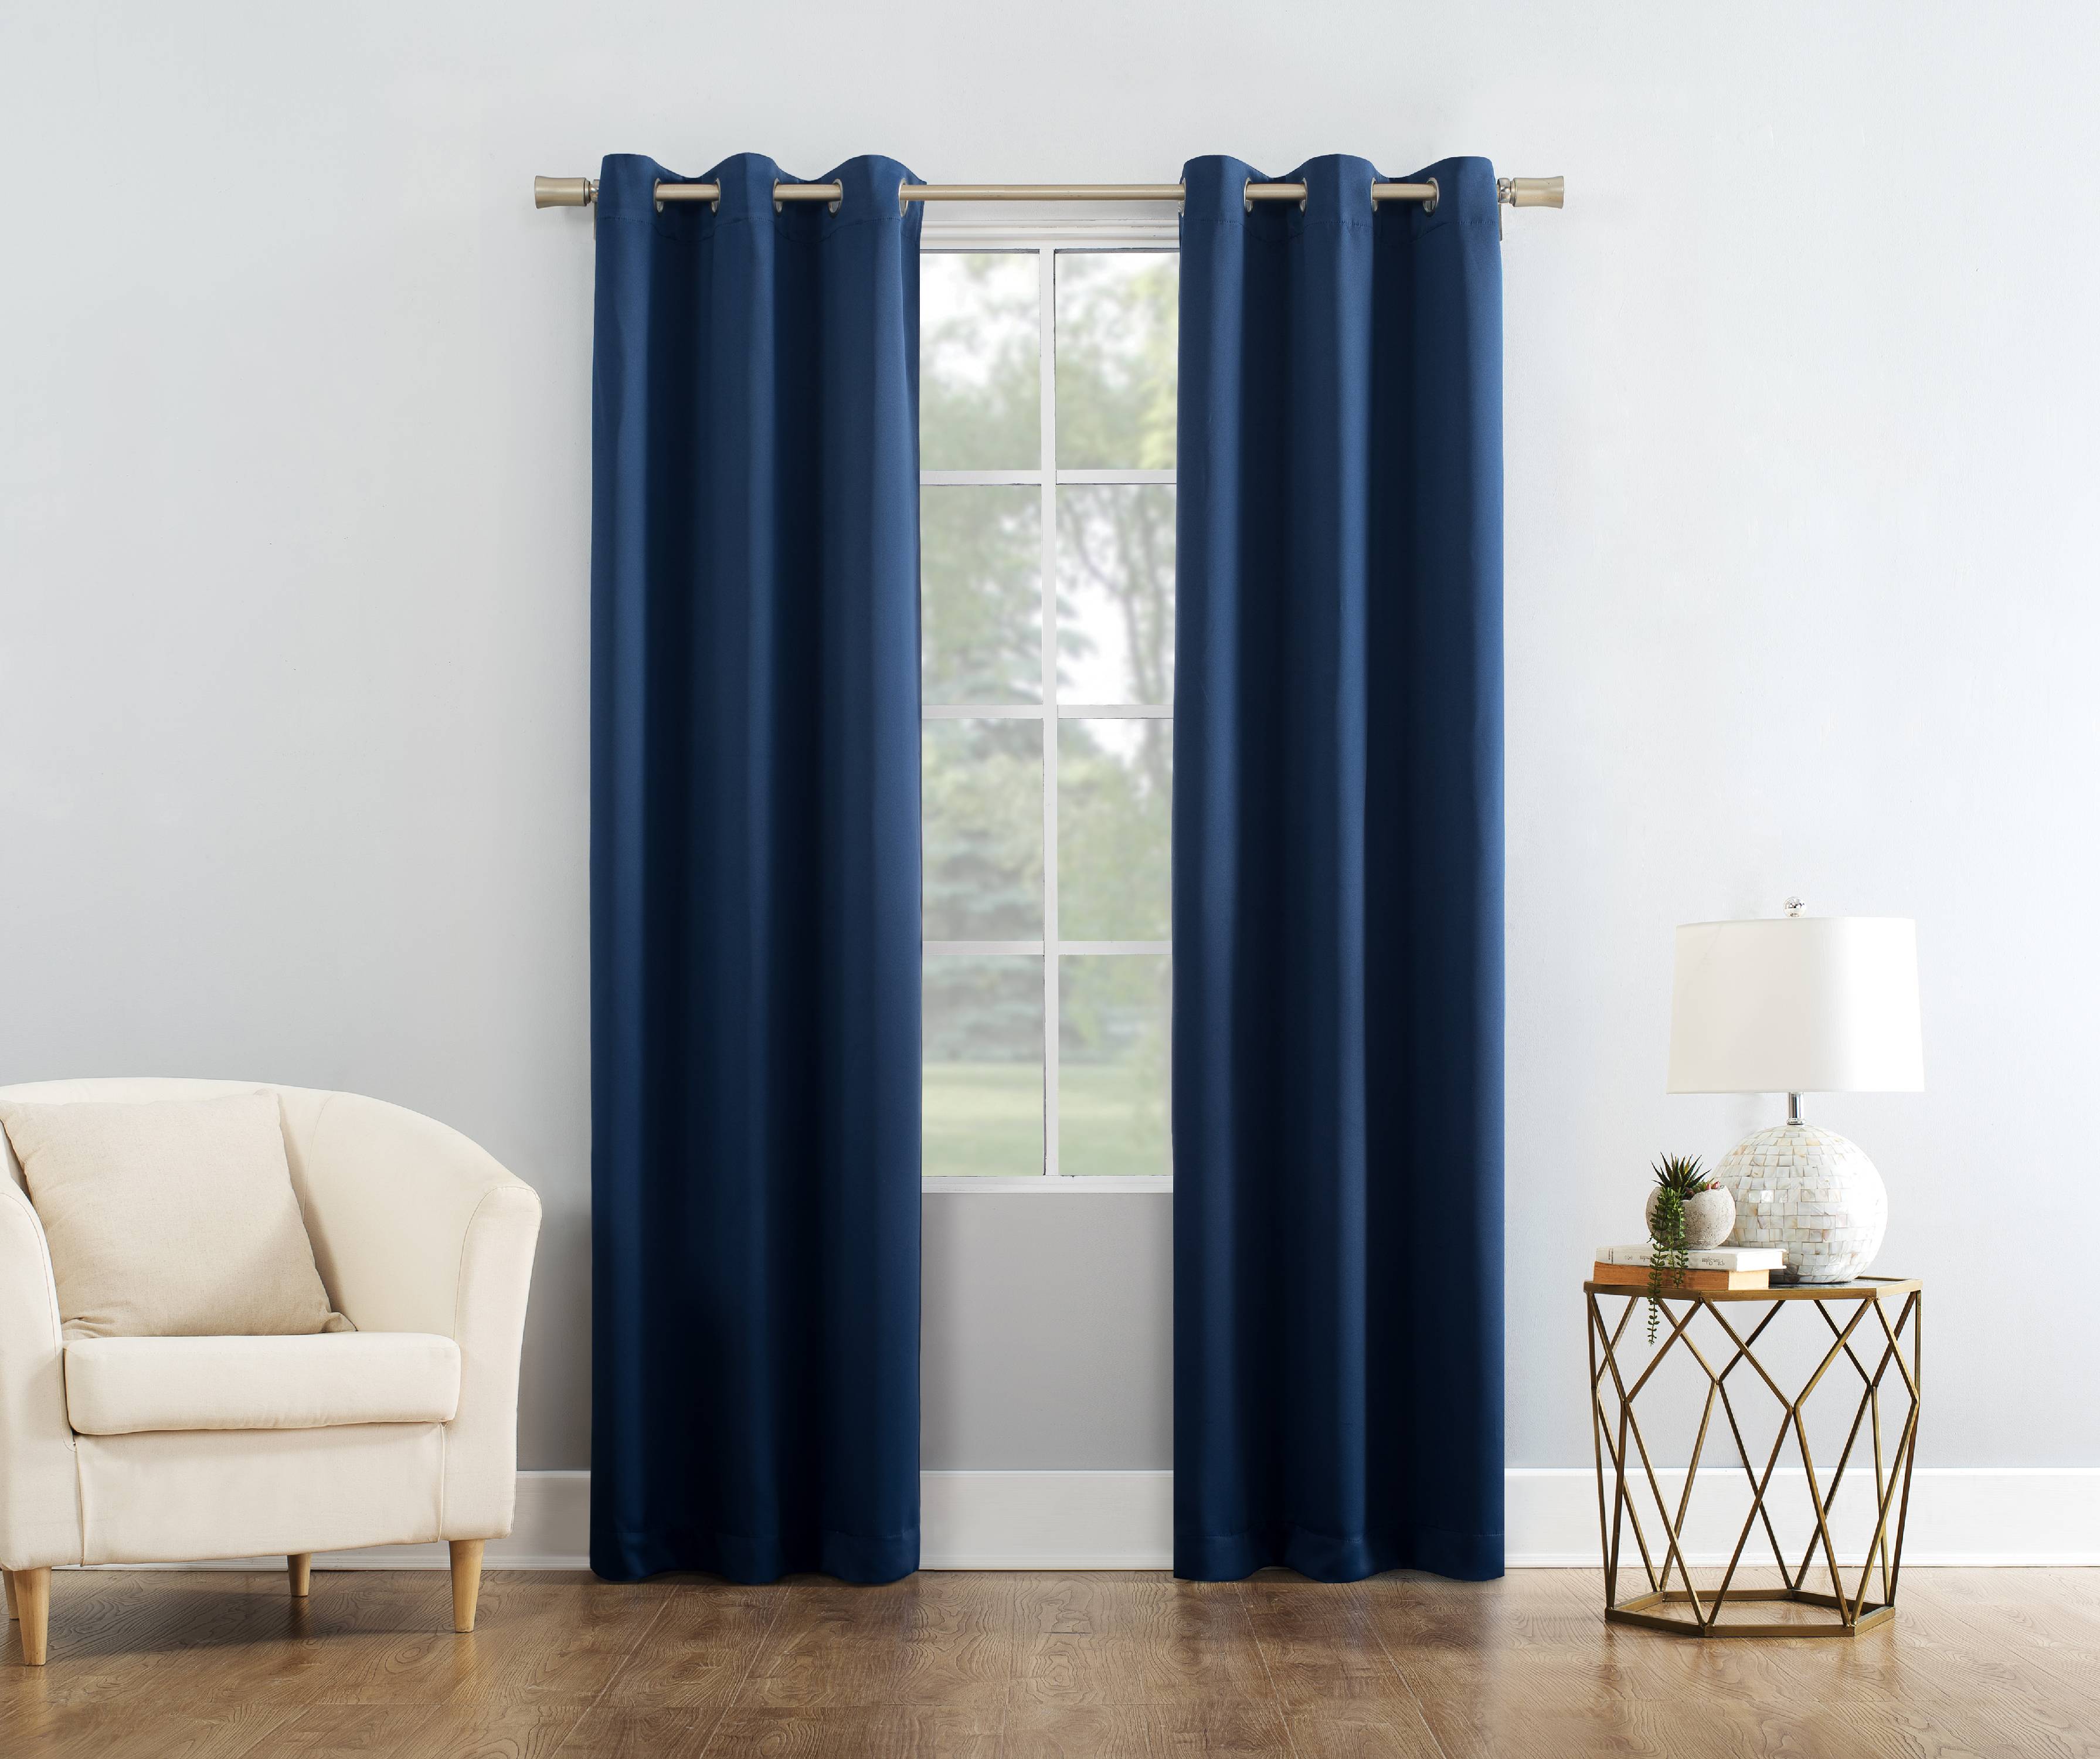 Mainstays Blackout Energy Efficient Grommet Single Curtain Panel, 40"x63", Blue - image 4 of 6